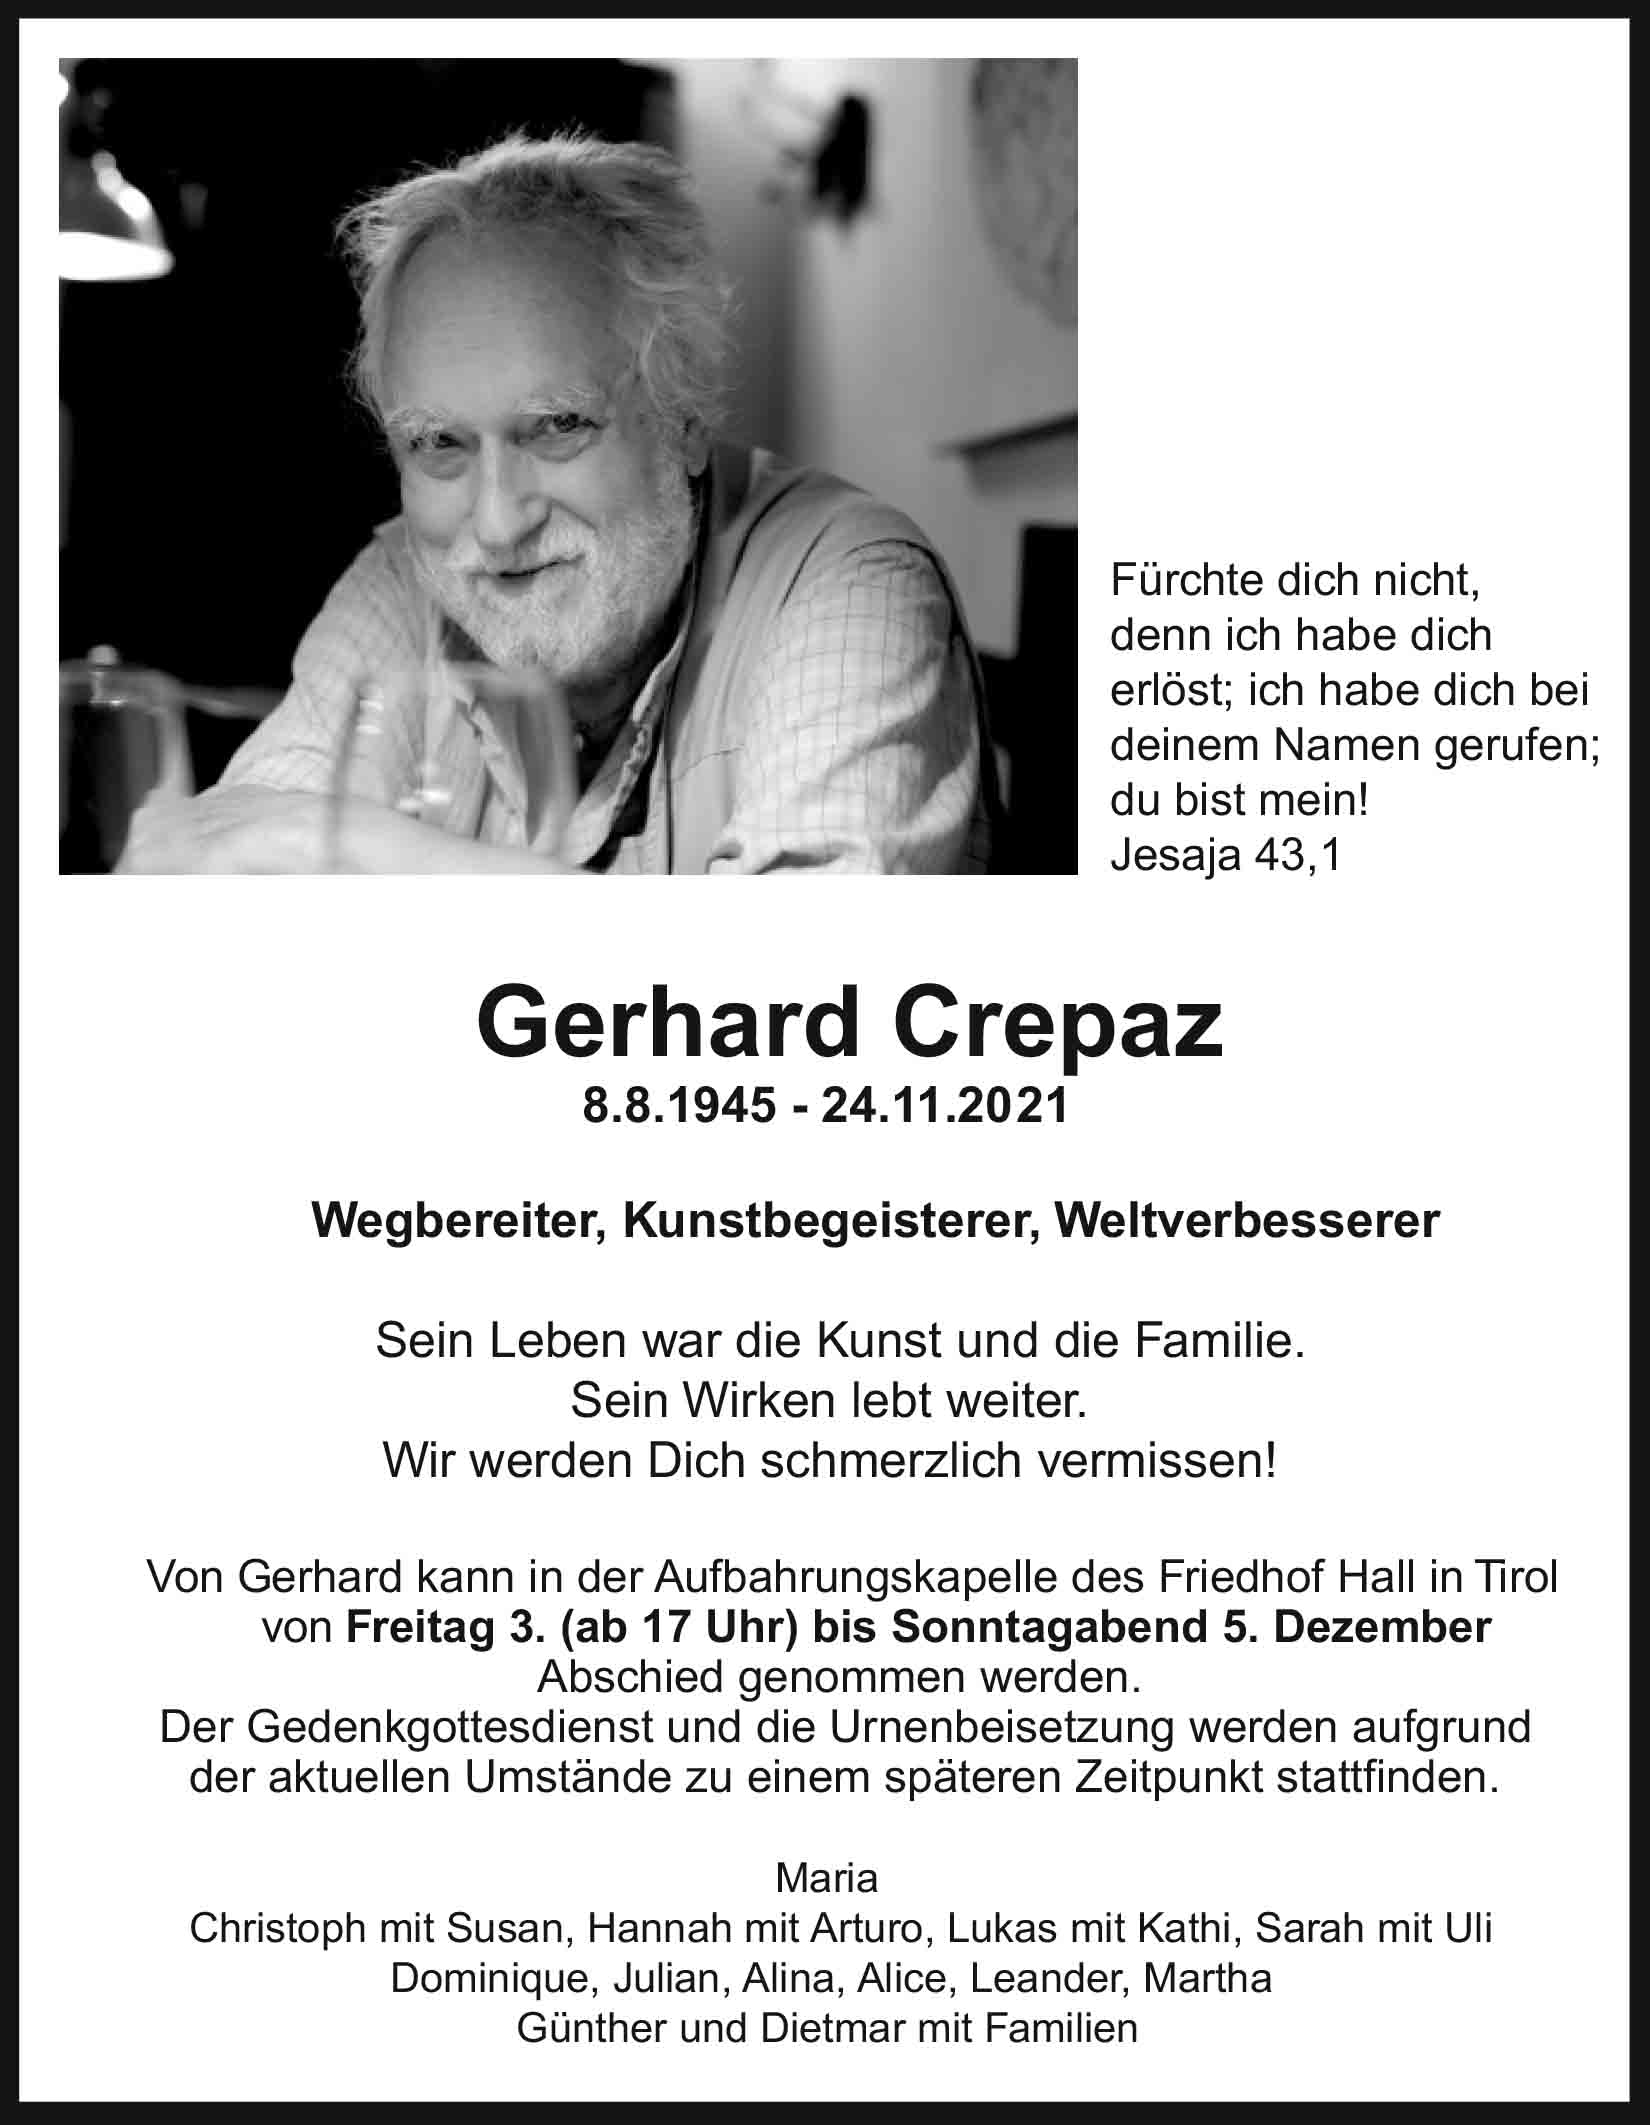 Gerhard Crepaz